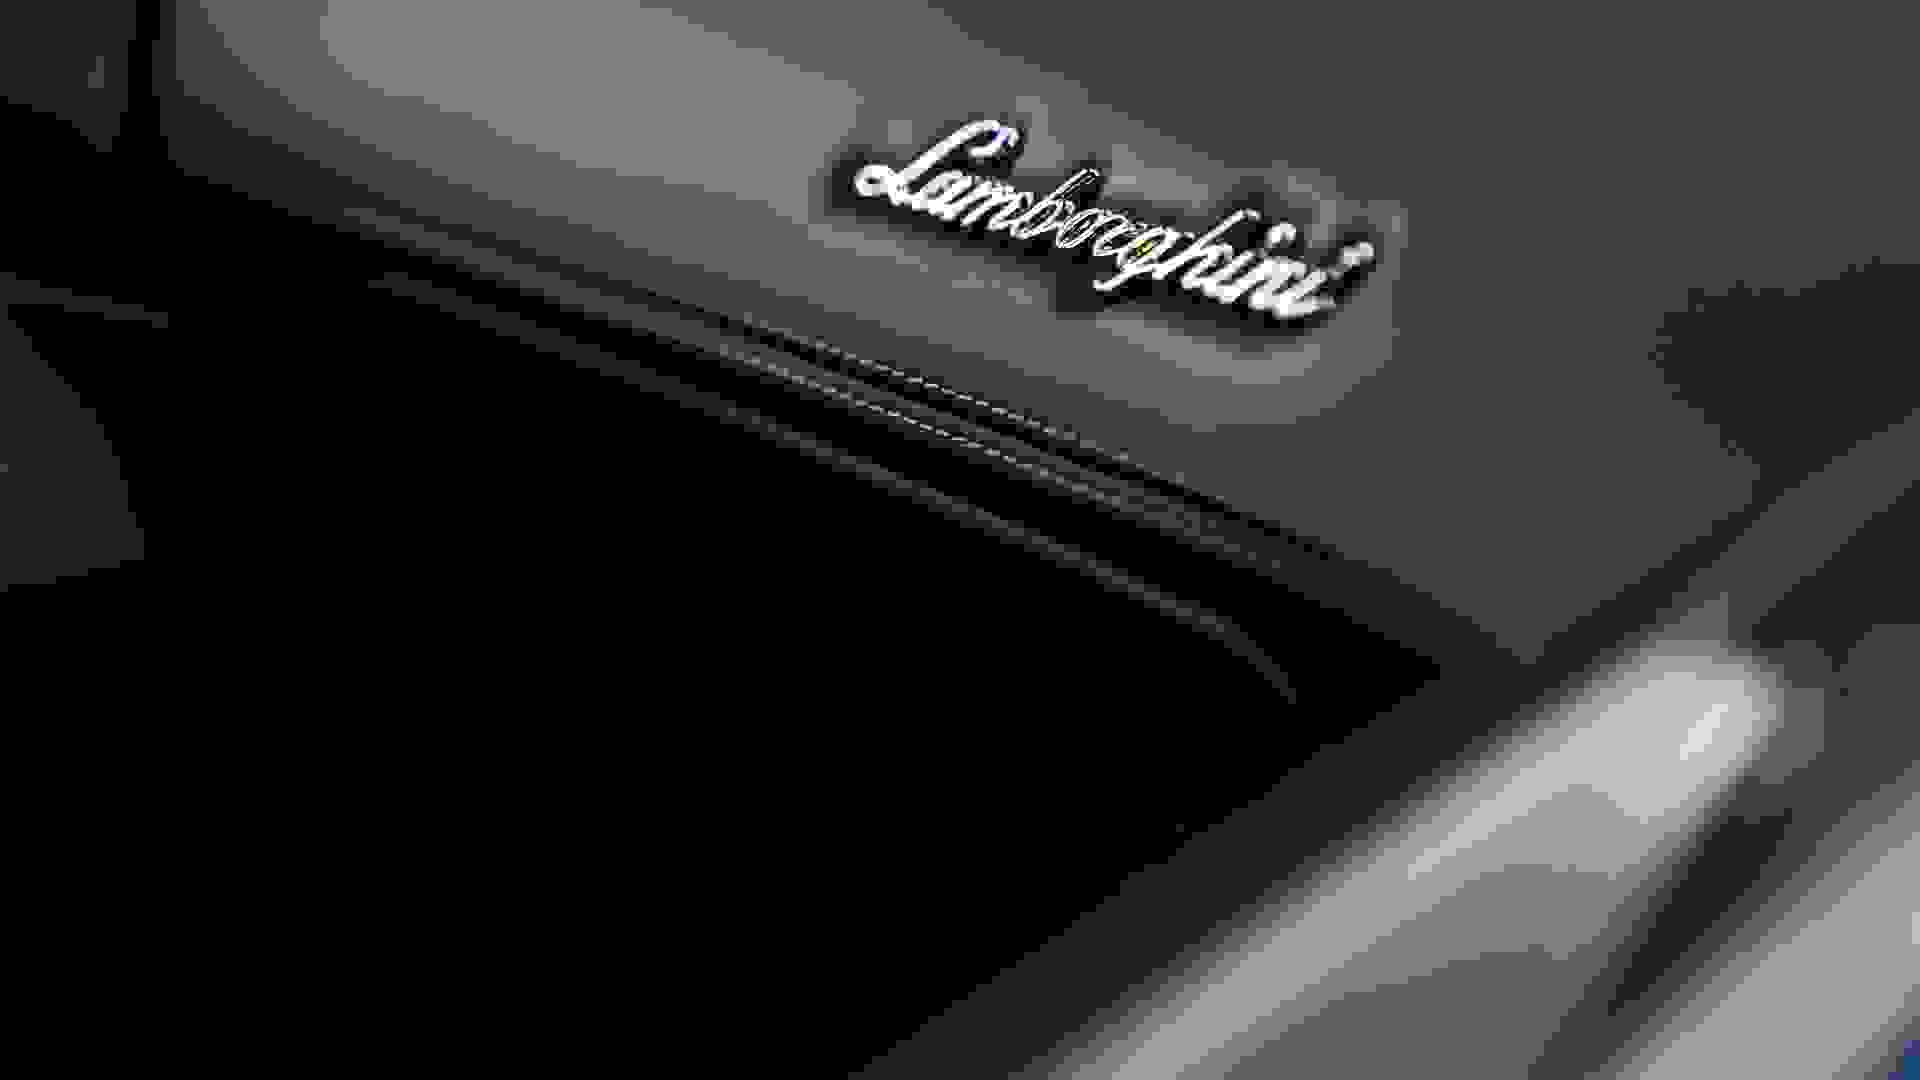 Lamborghini Aventador Photo 28605078-14ba-488e-ba31-7479f7734599.jpg